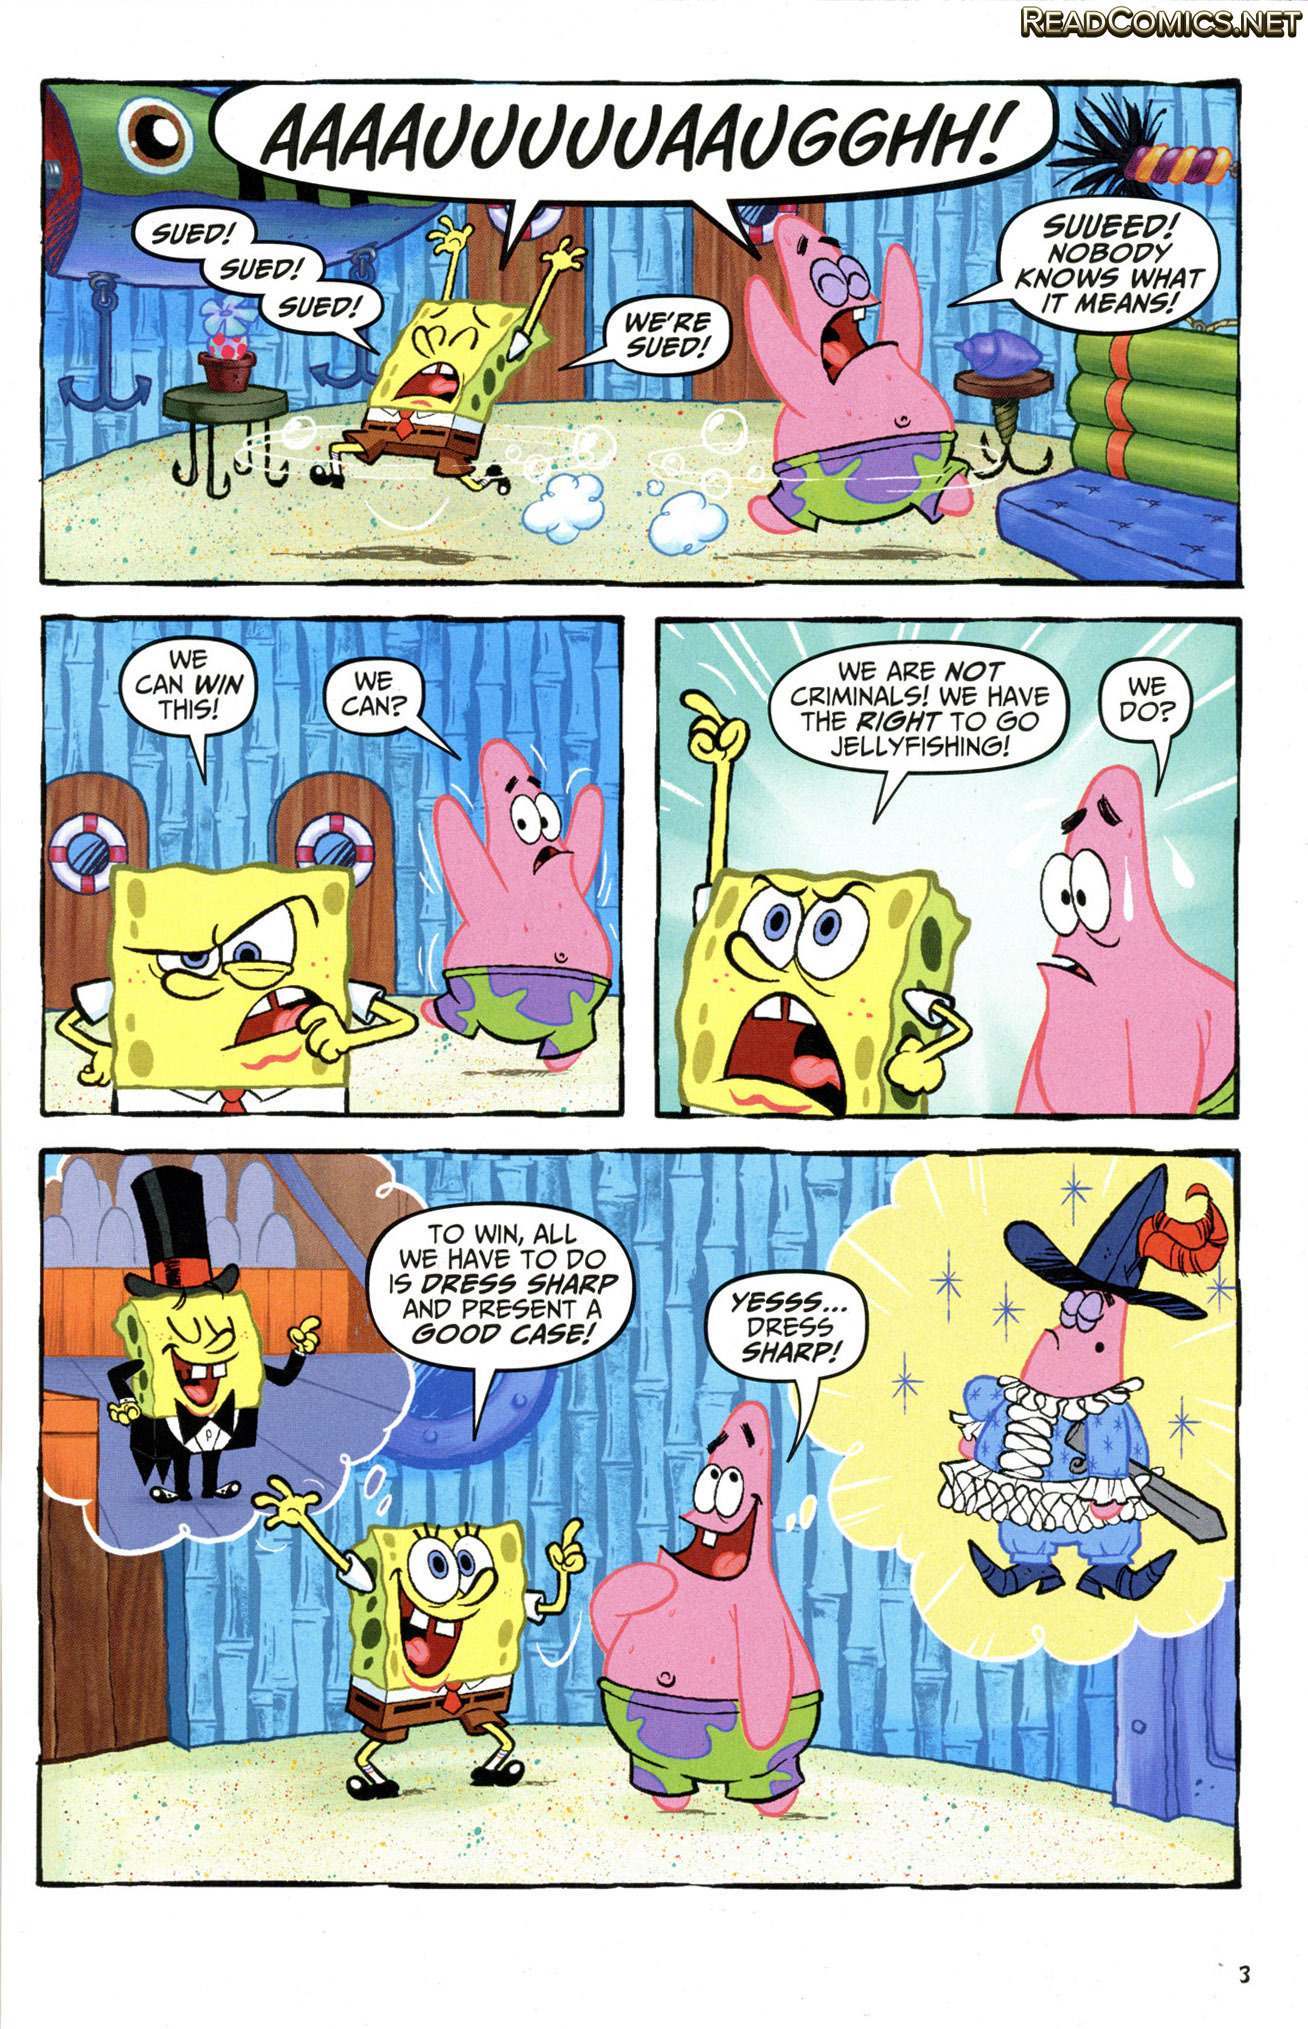 SpongeBob Comics (2011-): Chapter 27 - Page 5